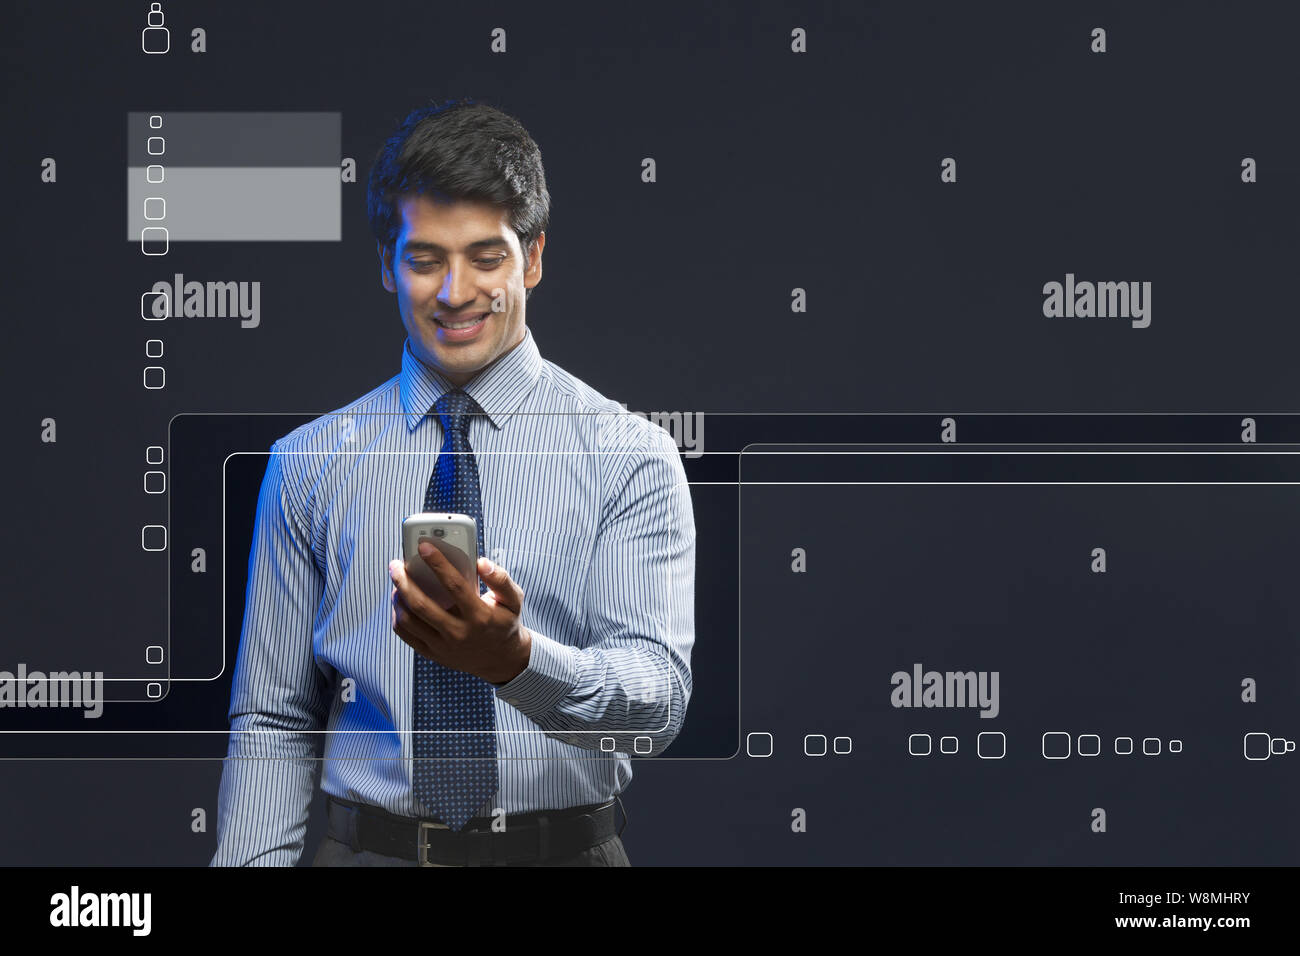 Hombre de negocios que utiliza un smartphone cerca de una pantalla táctil Foto de stock